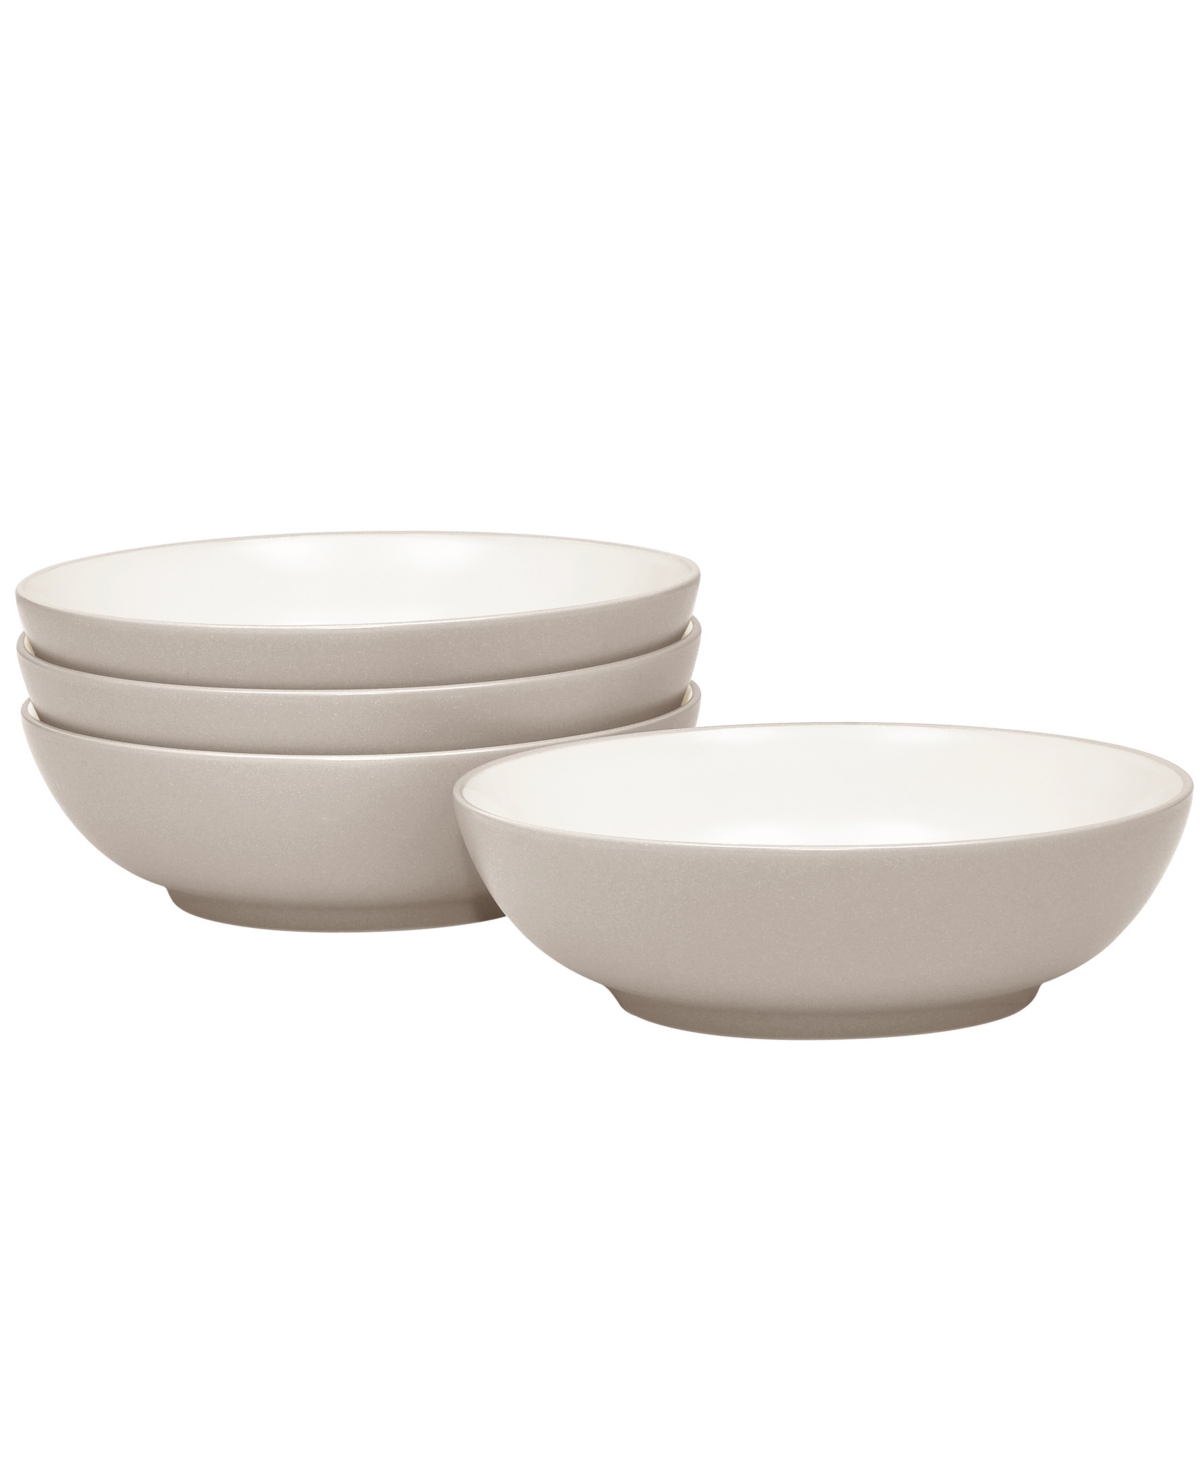 Colorwave Soup/Cereal Bowls 22 Oz, Set of 4 - Clay